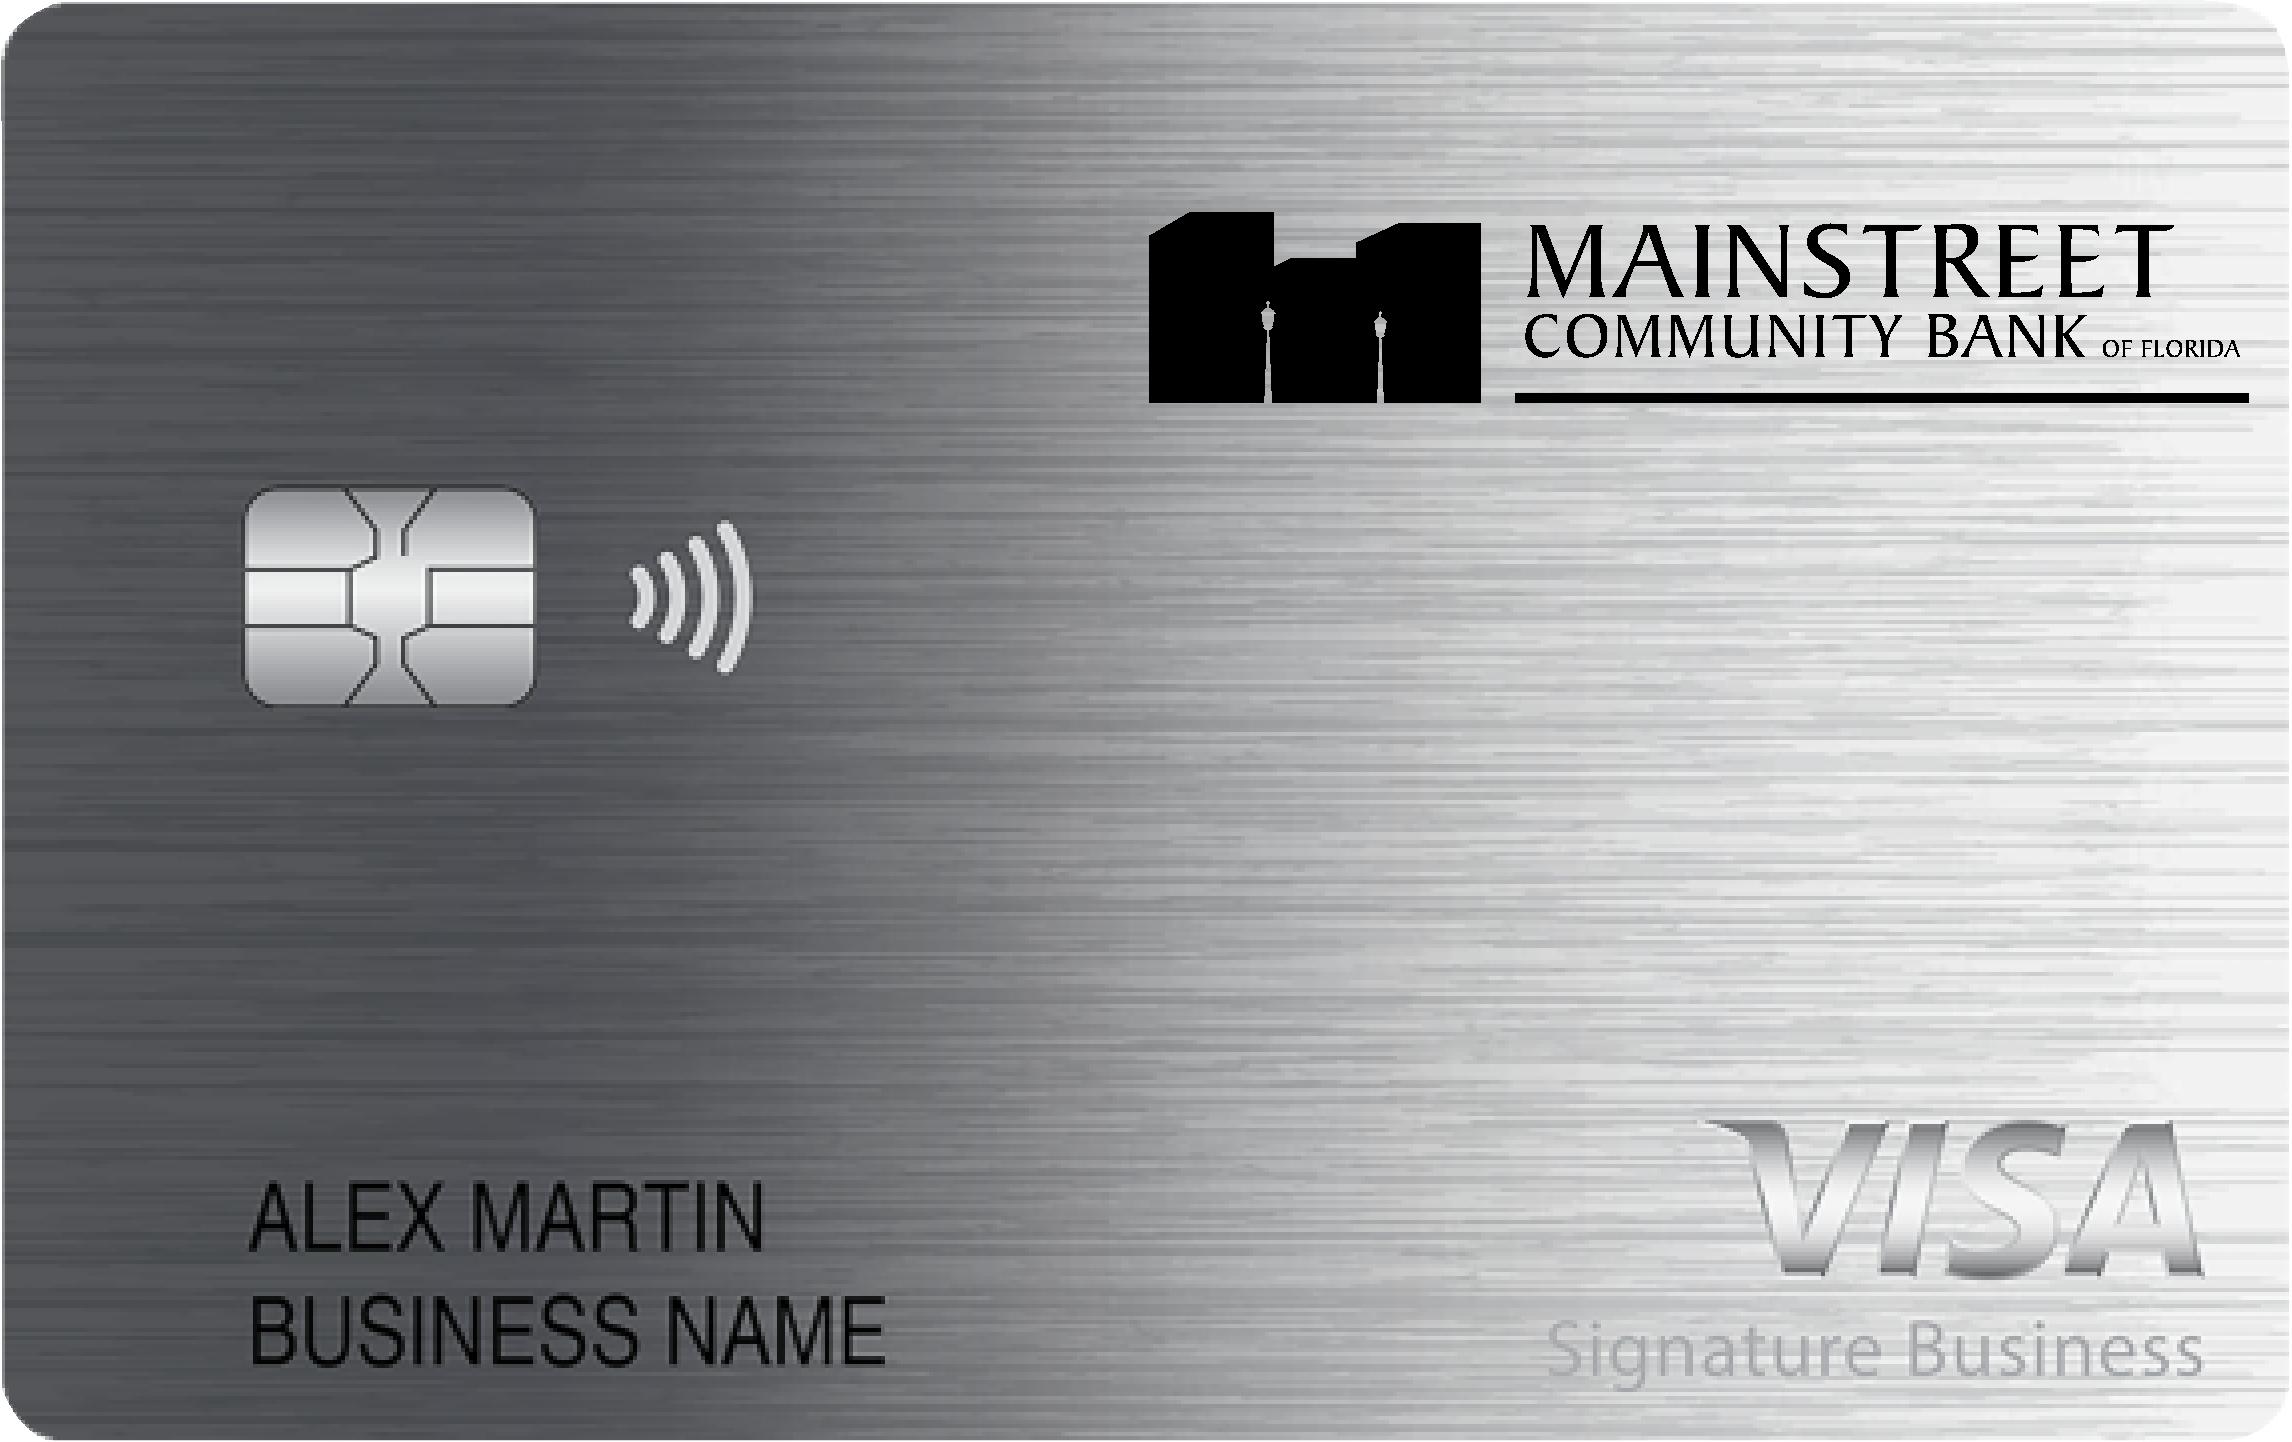 Mainstreet Community Bank of Florida Smart Business Rewards Card